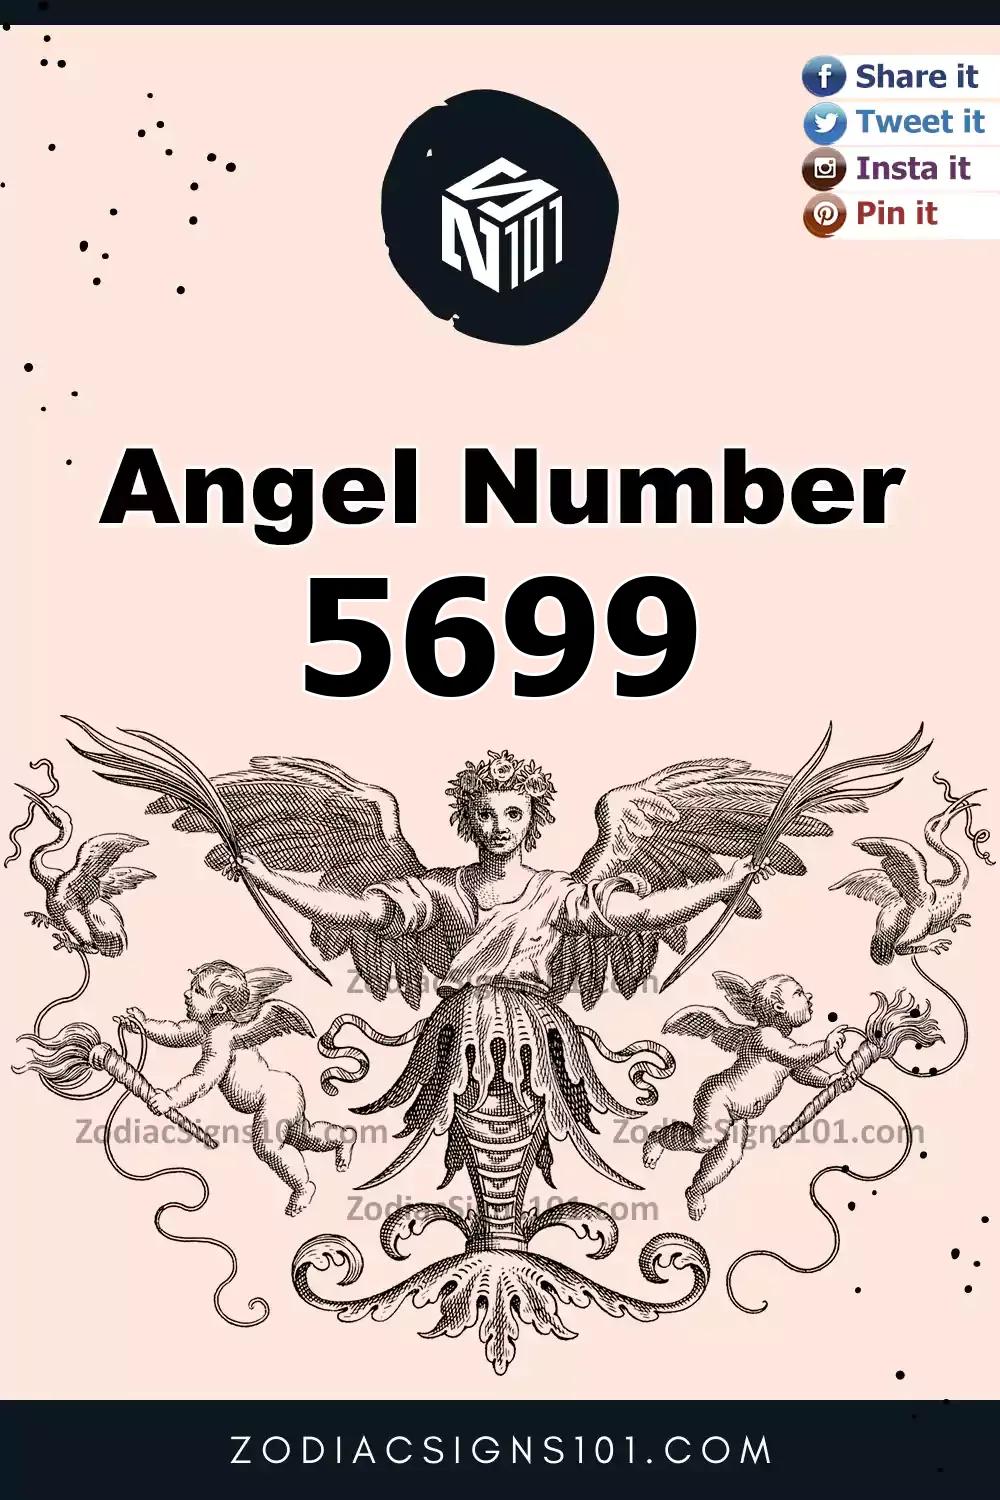 5699-Angel-Number-Meaning.jpg